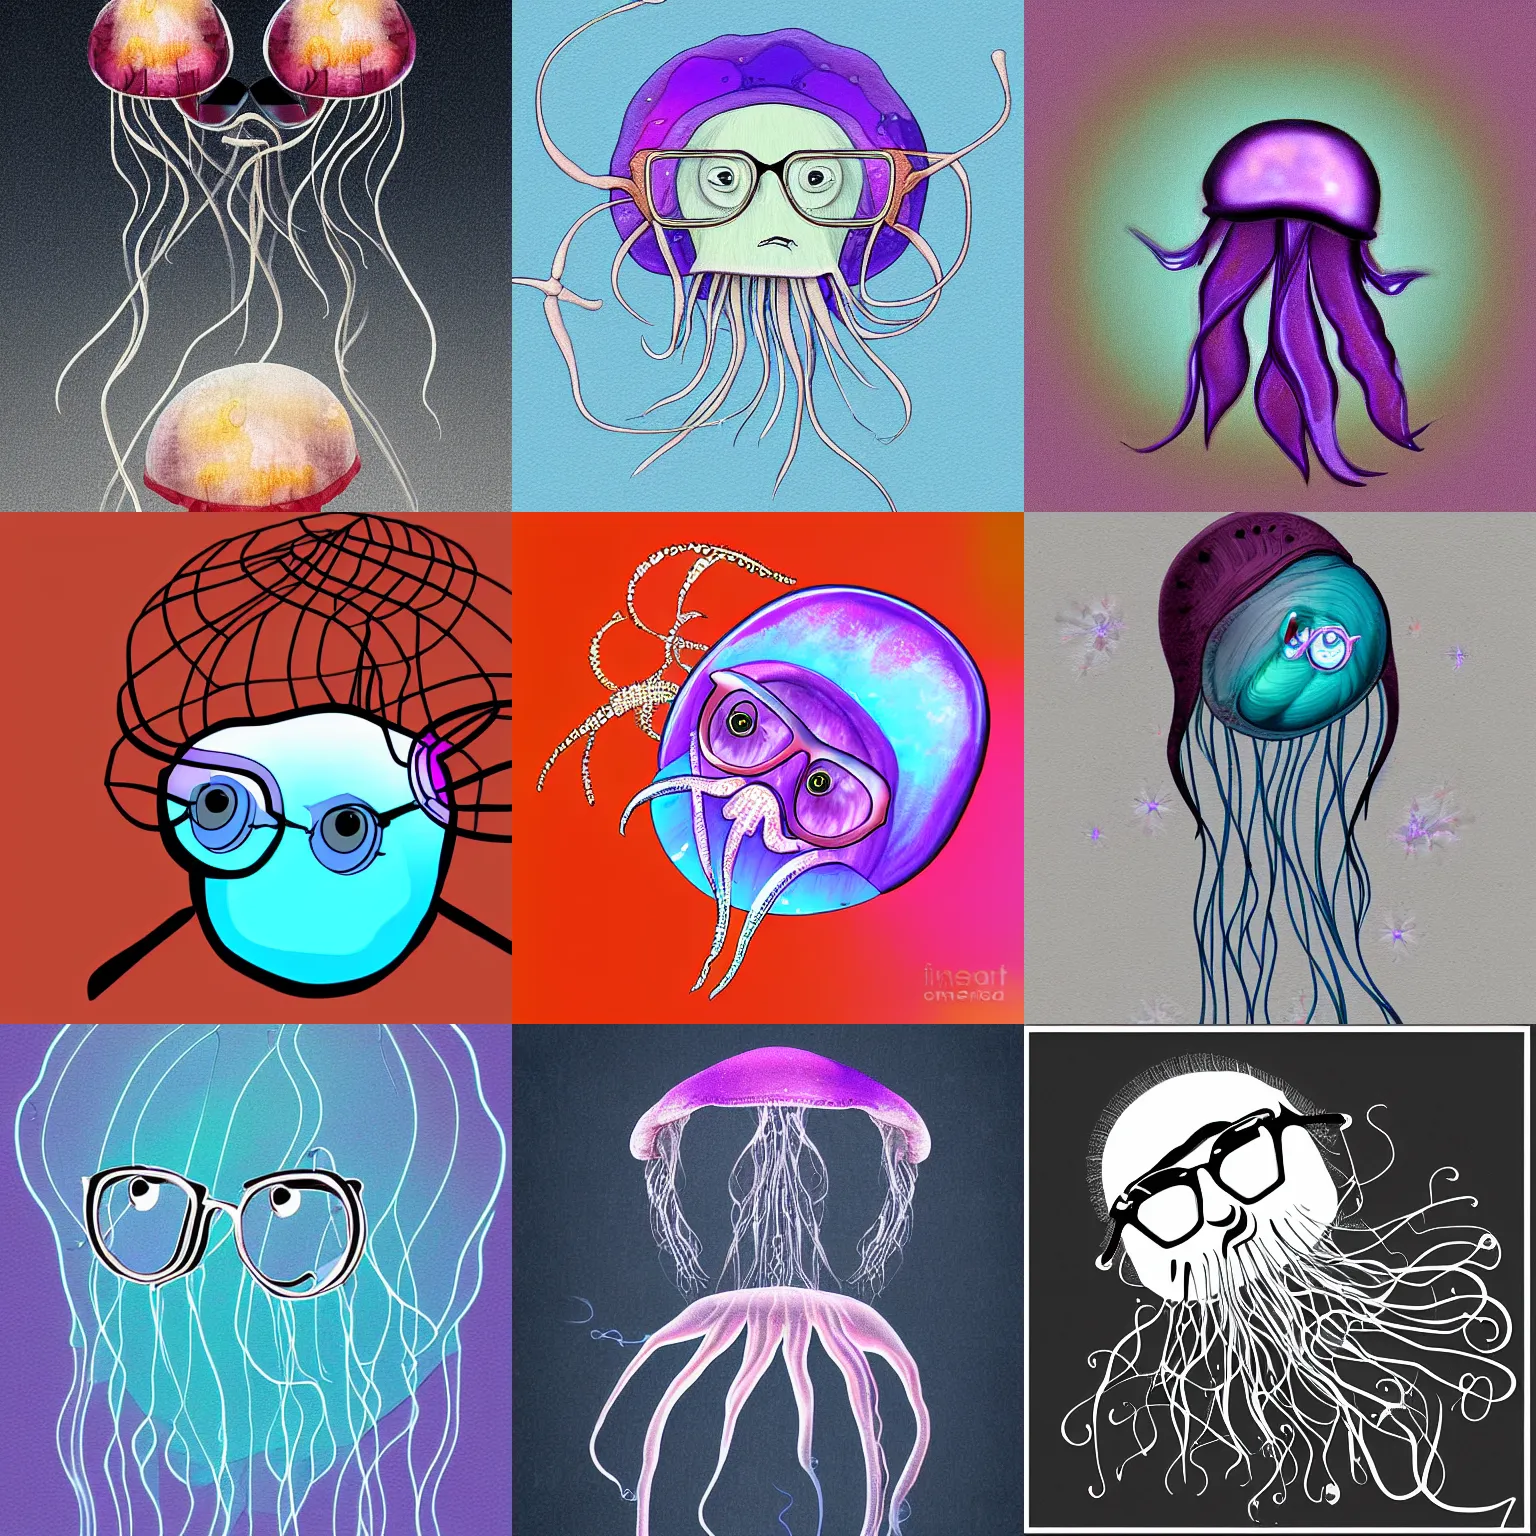 Prompt: a jellyfish wearing glasses, rimless frames, digital art